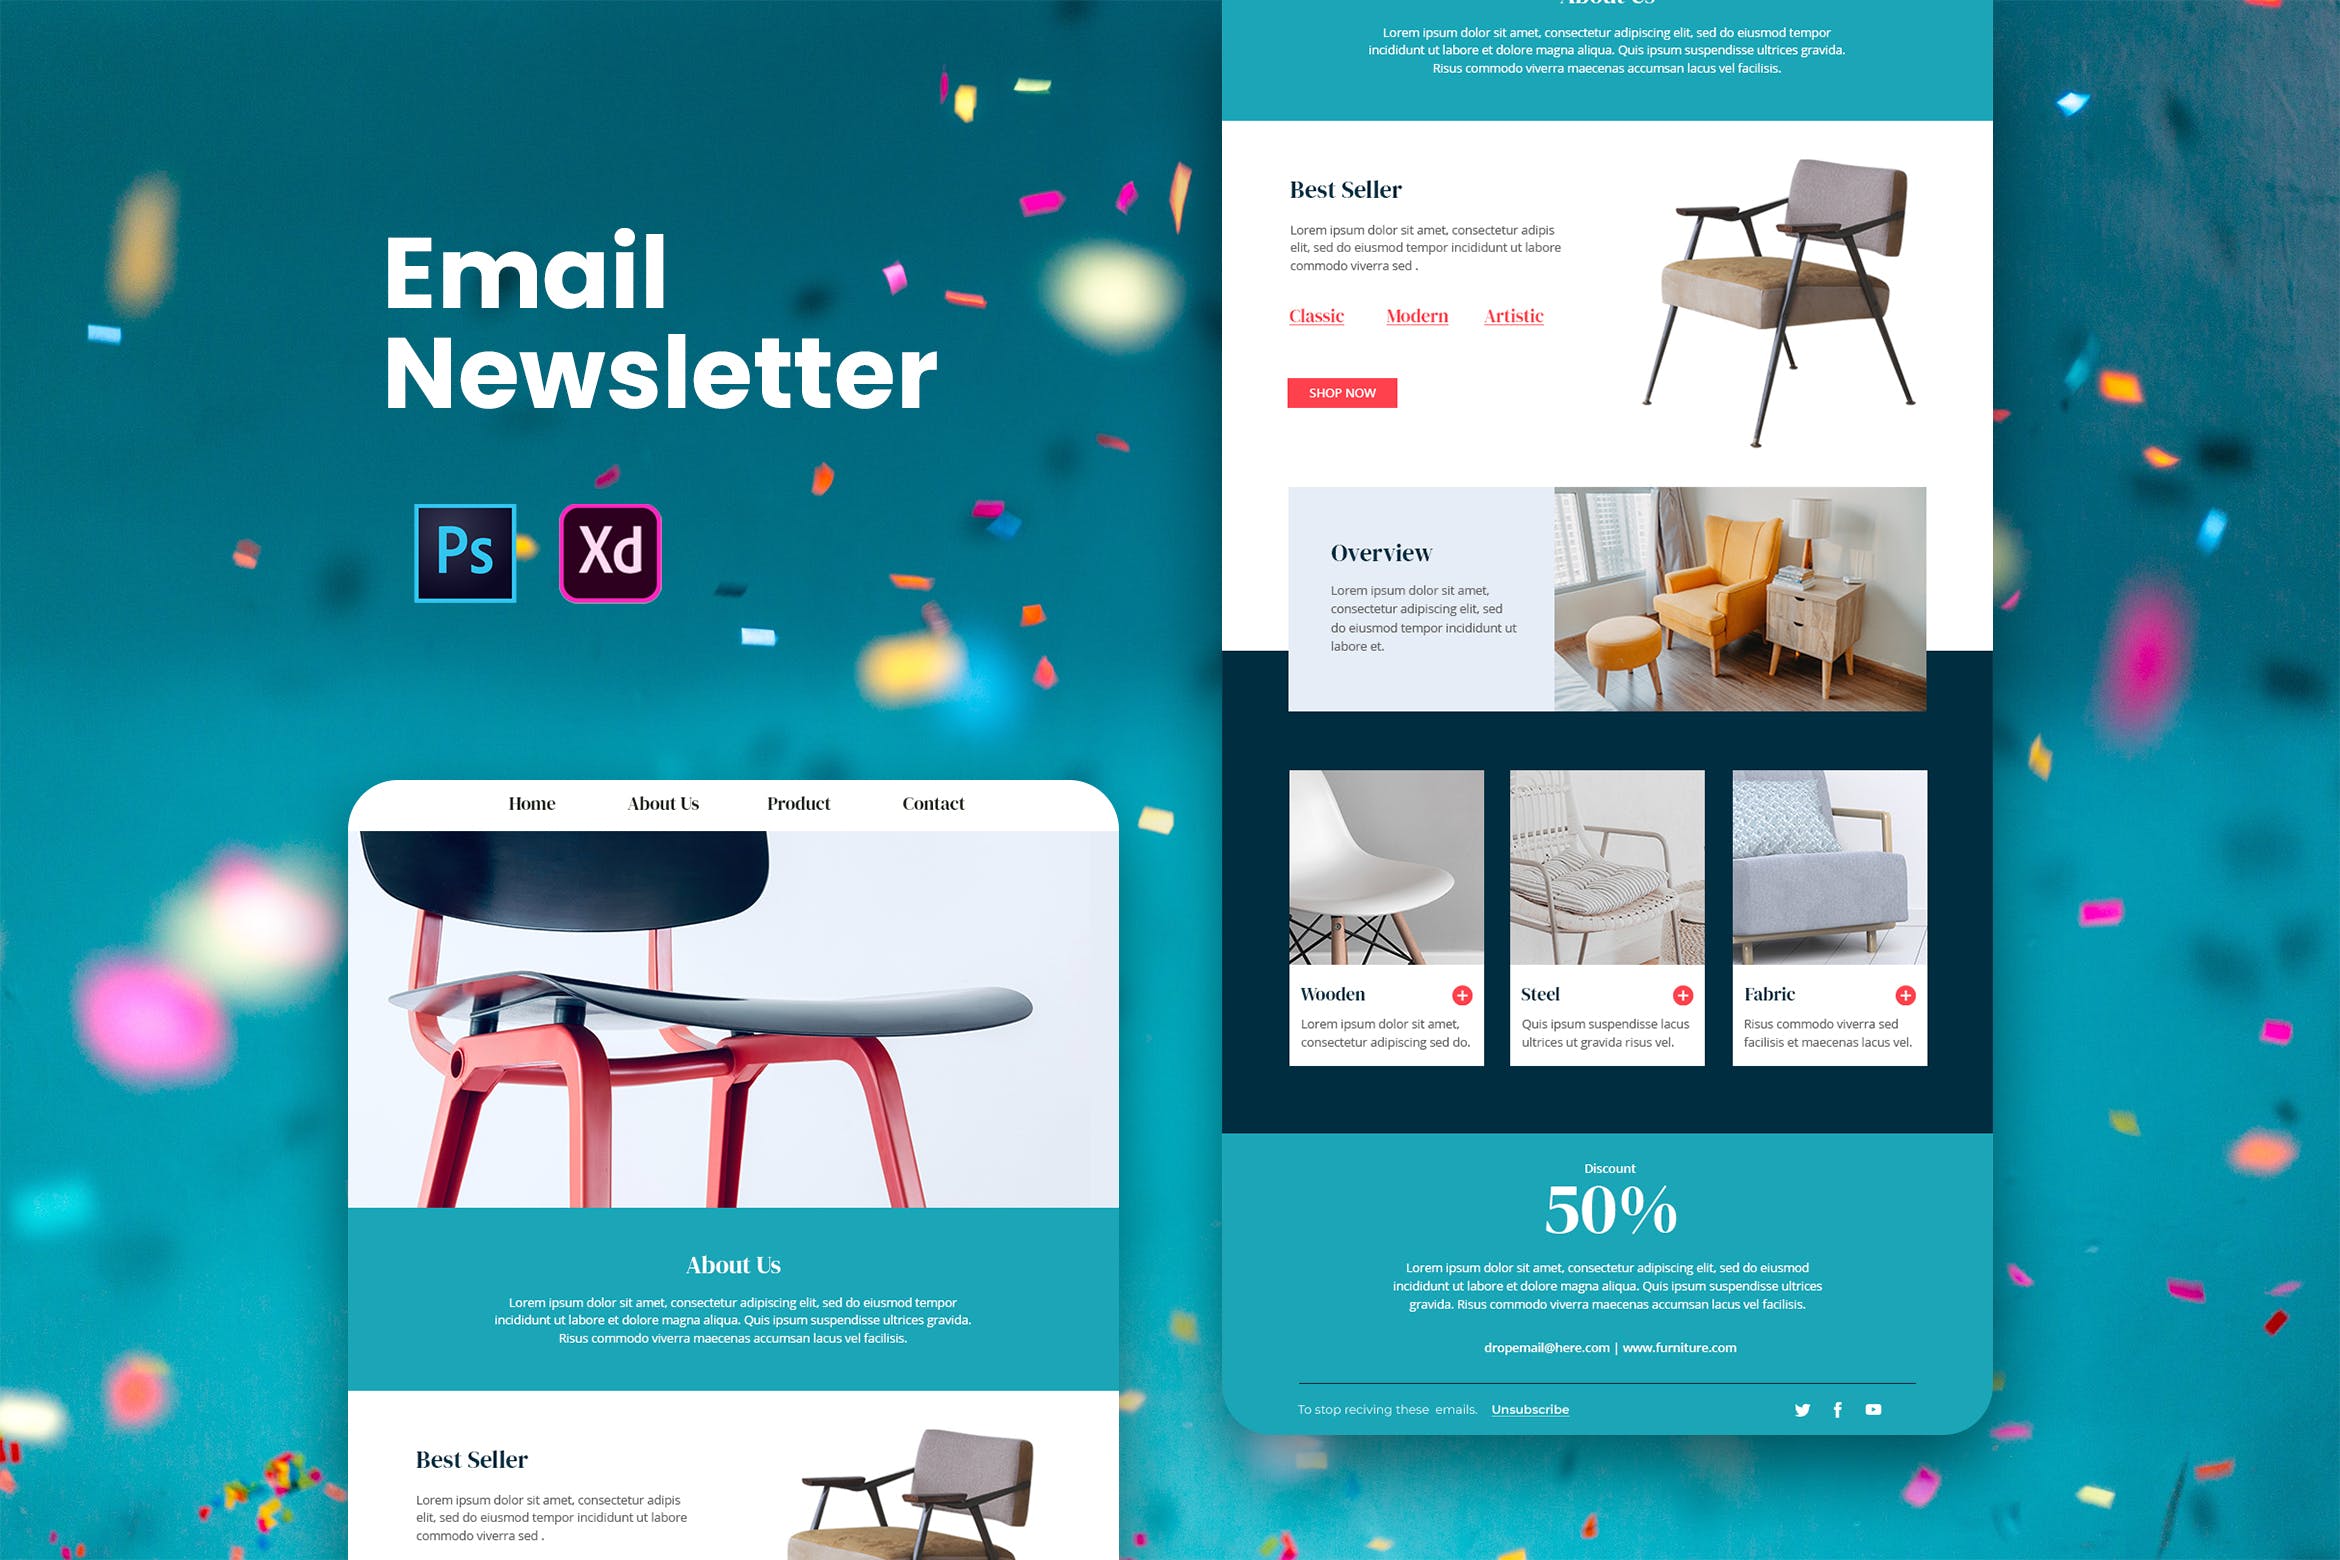 家具品牌推广EDM邮件模板素材库精选 Furniture Email Newsletter插图